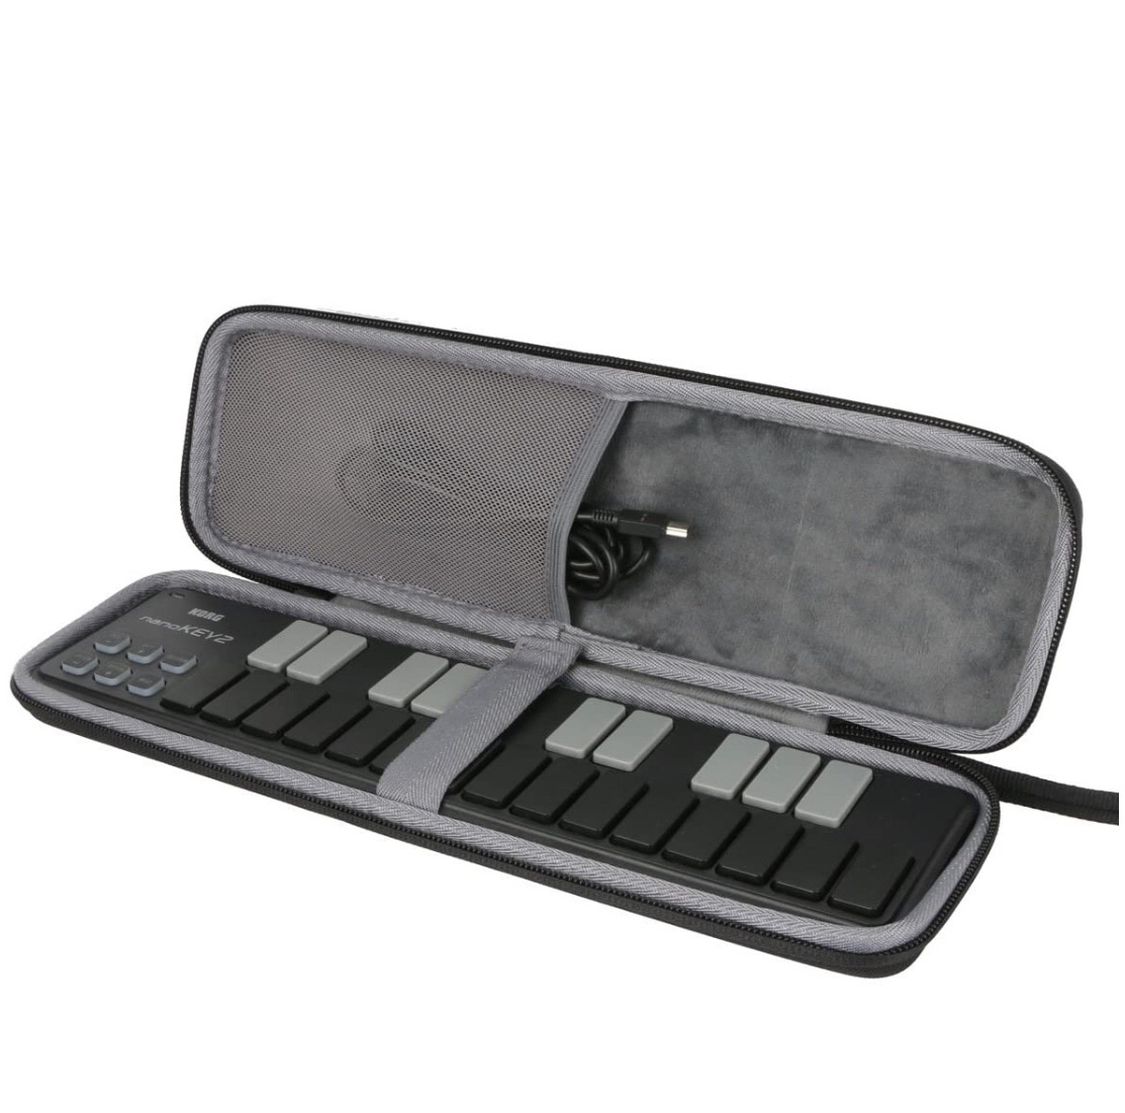 Hard Travel Case for Korg Nano Slim Line MIDI Keyboard/DJ Drum Pad/USB Controller nanoKEY2 nanoPAD2 nanoKONTROL2